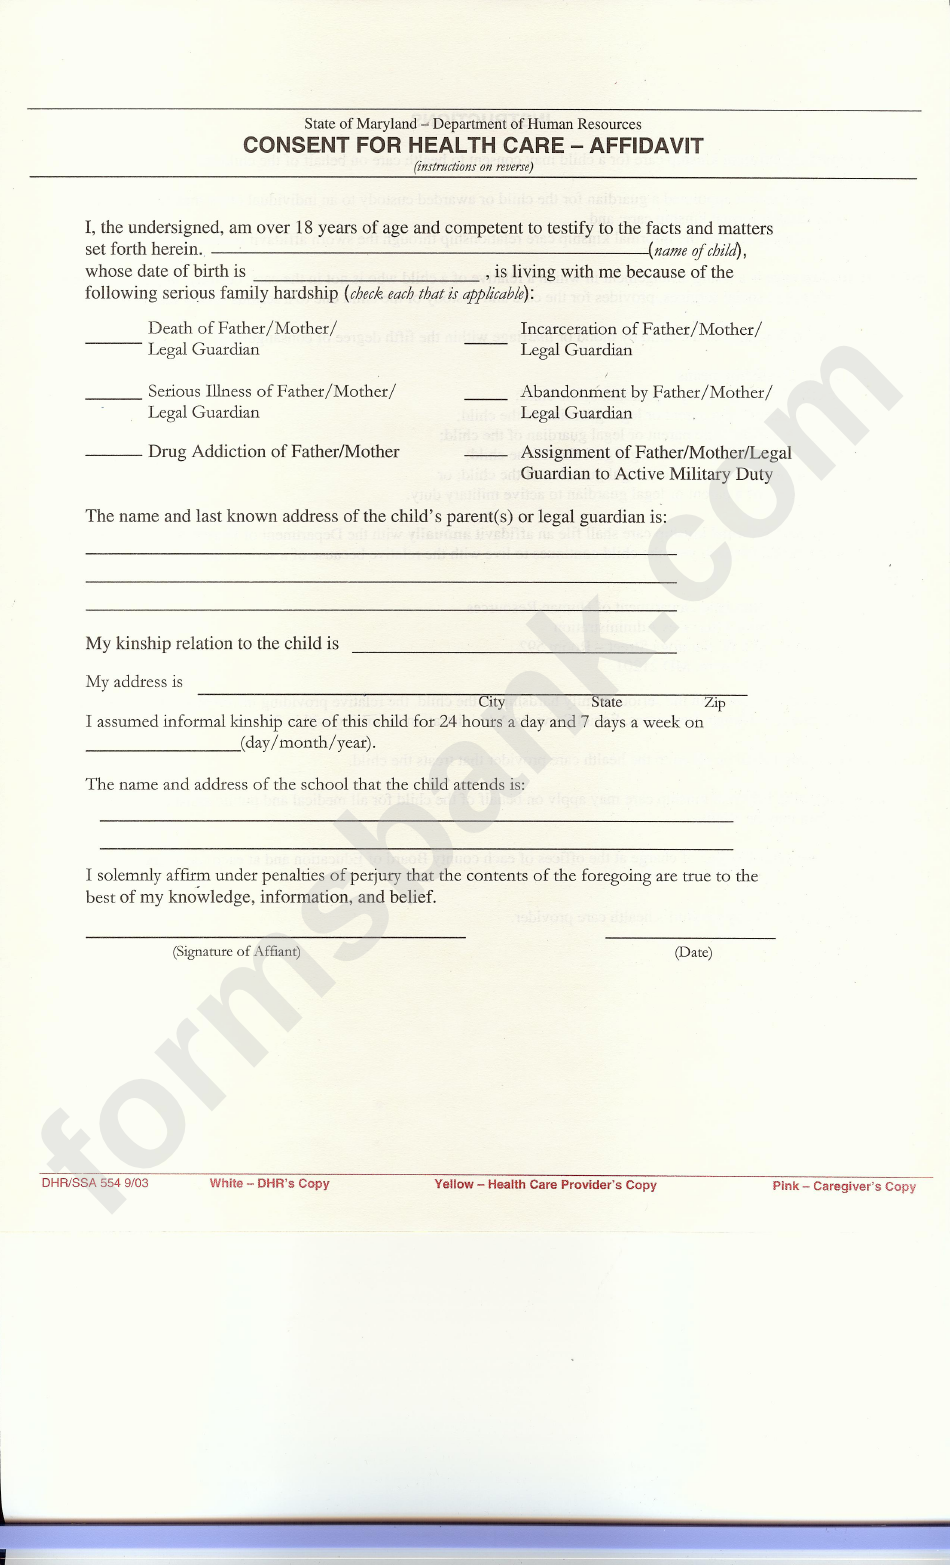 Form Dhr/ssa 554 - Consent For Health Care - Affidavit